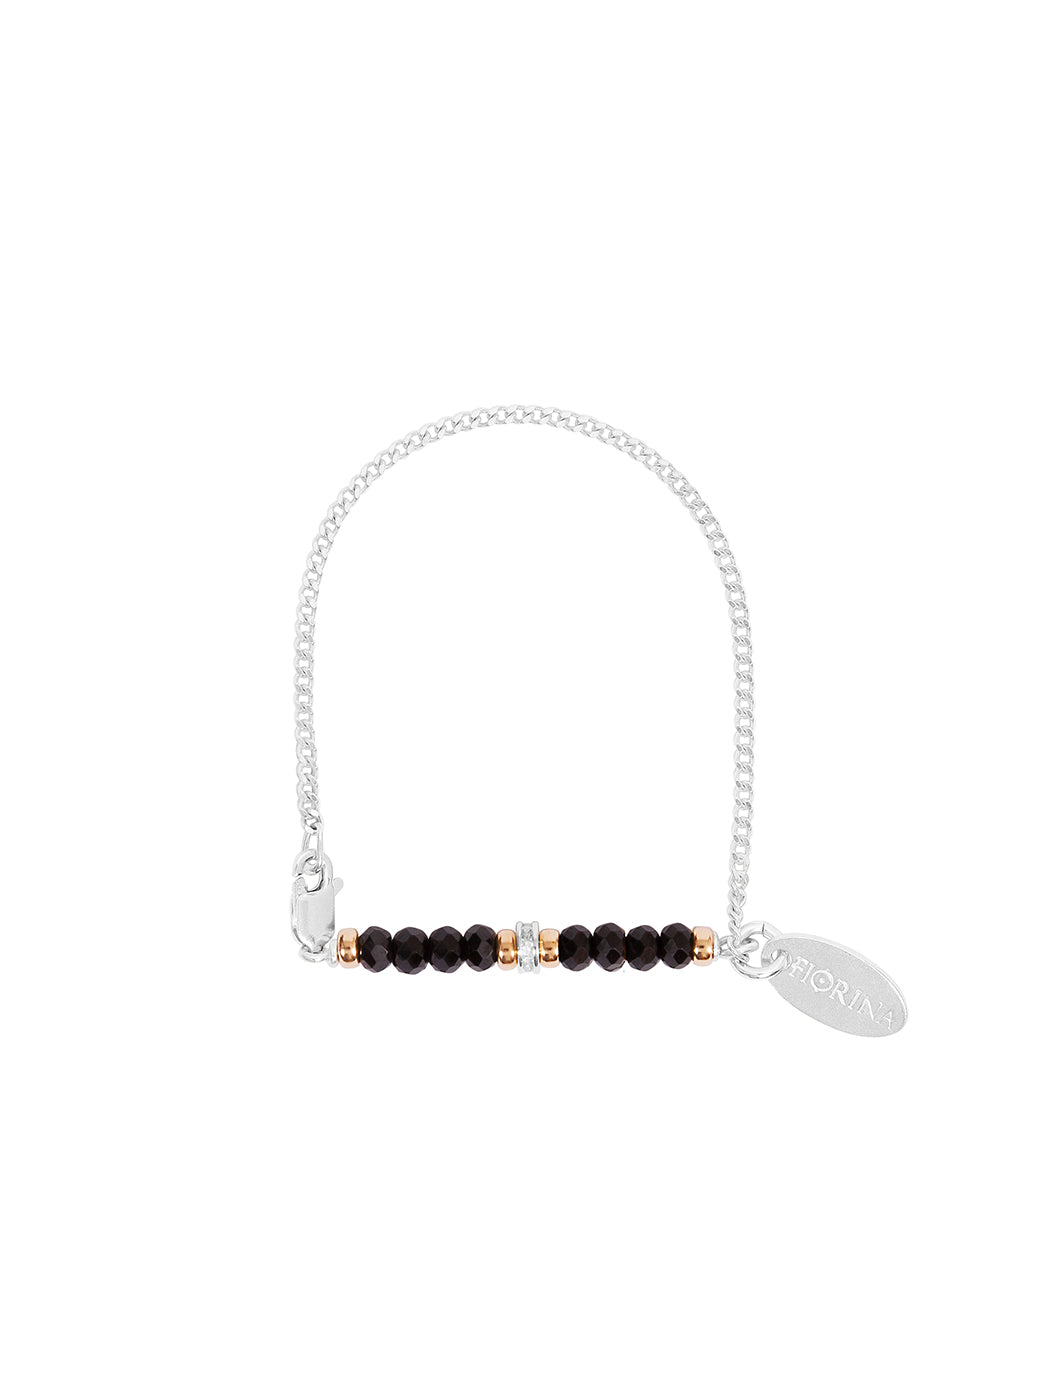 Fiorina Jewellery Romance Bracelet Black Onyx